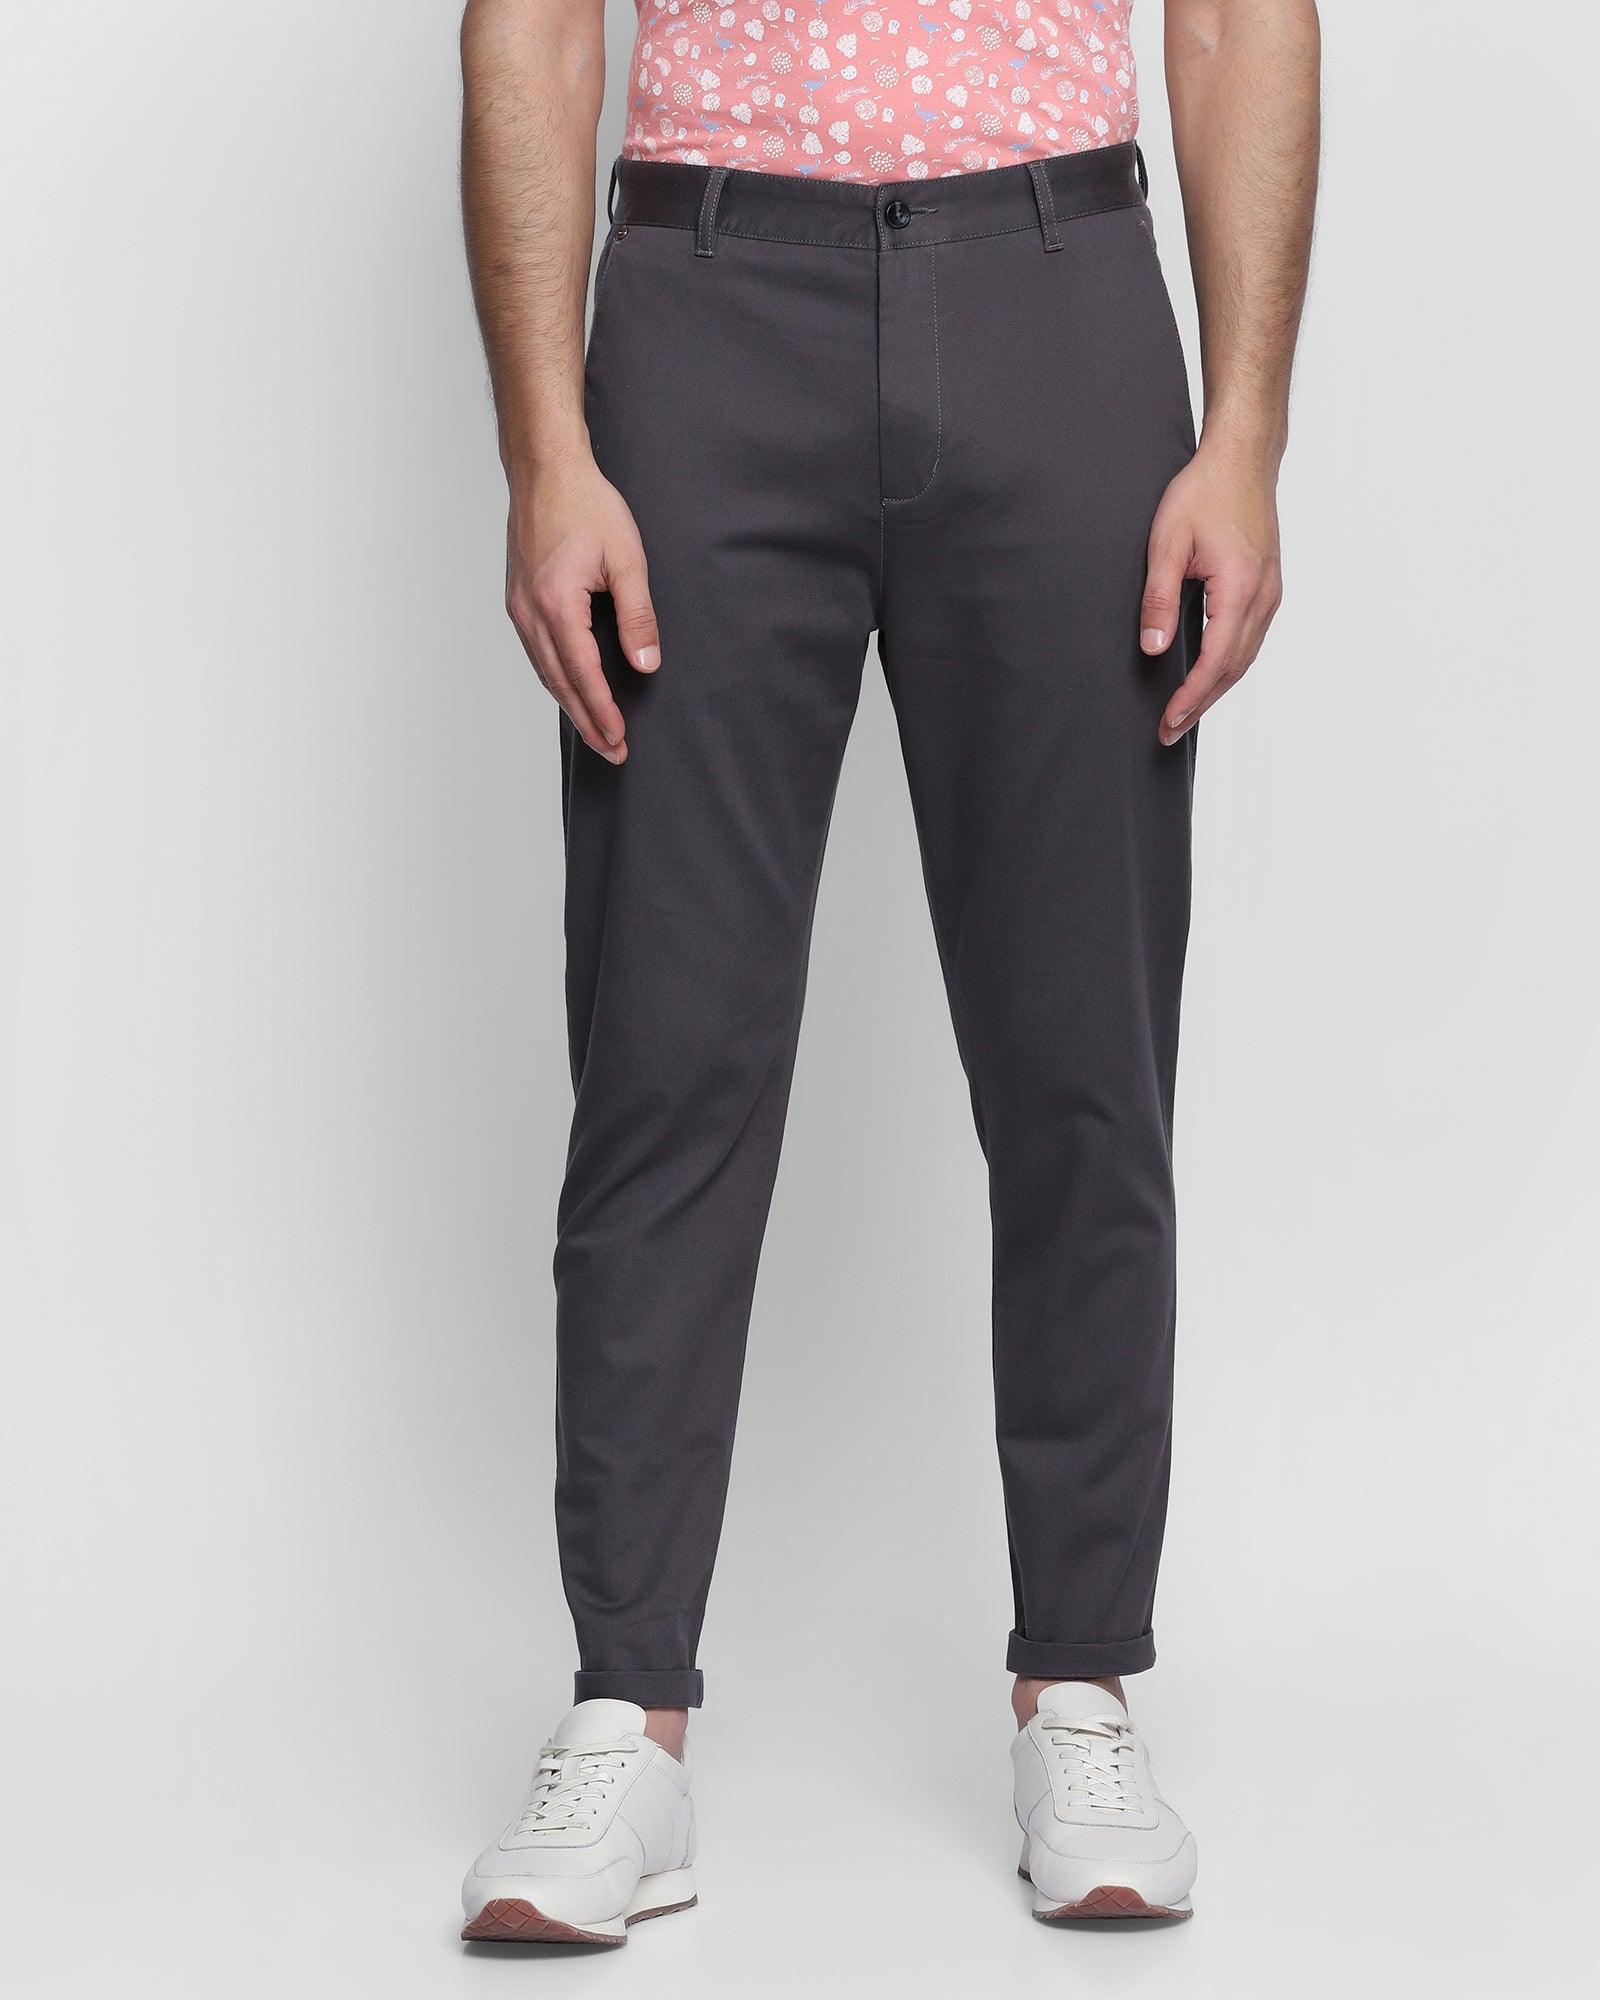 nadal casual dark grey solid khakis - harley